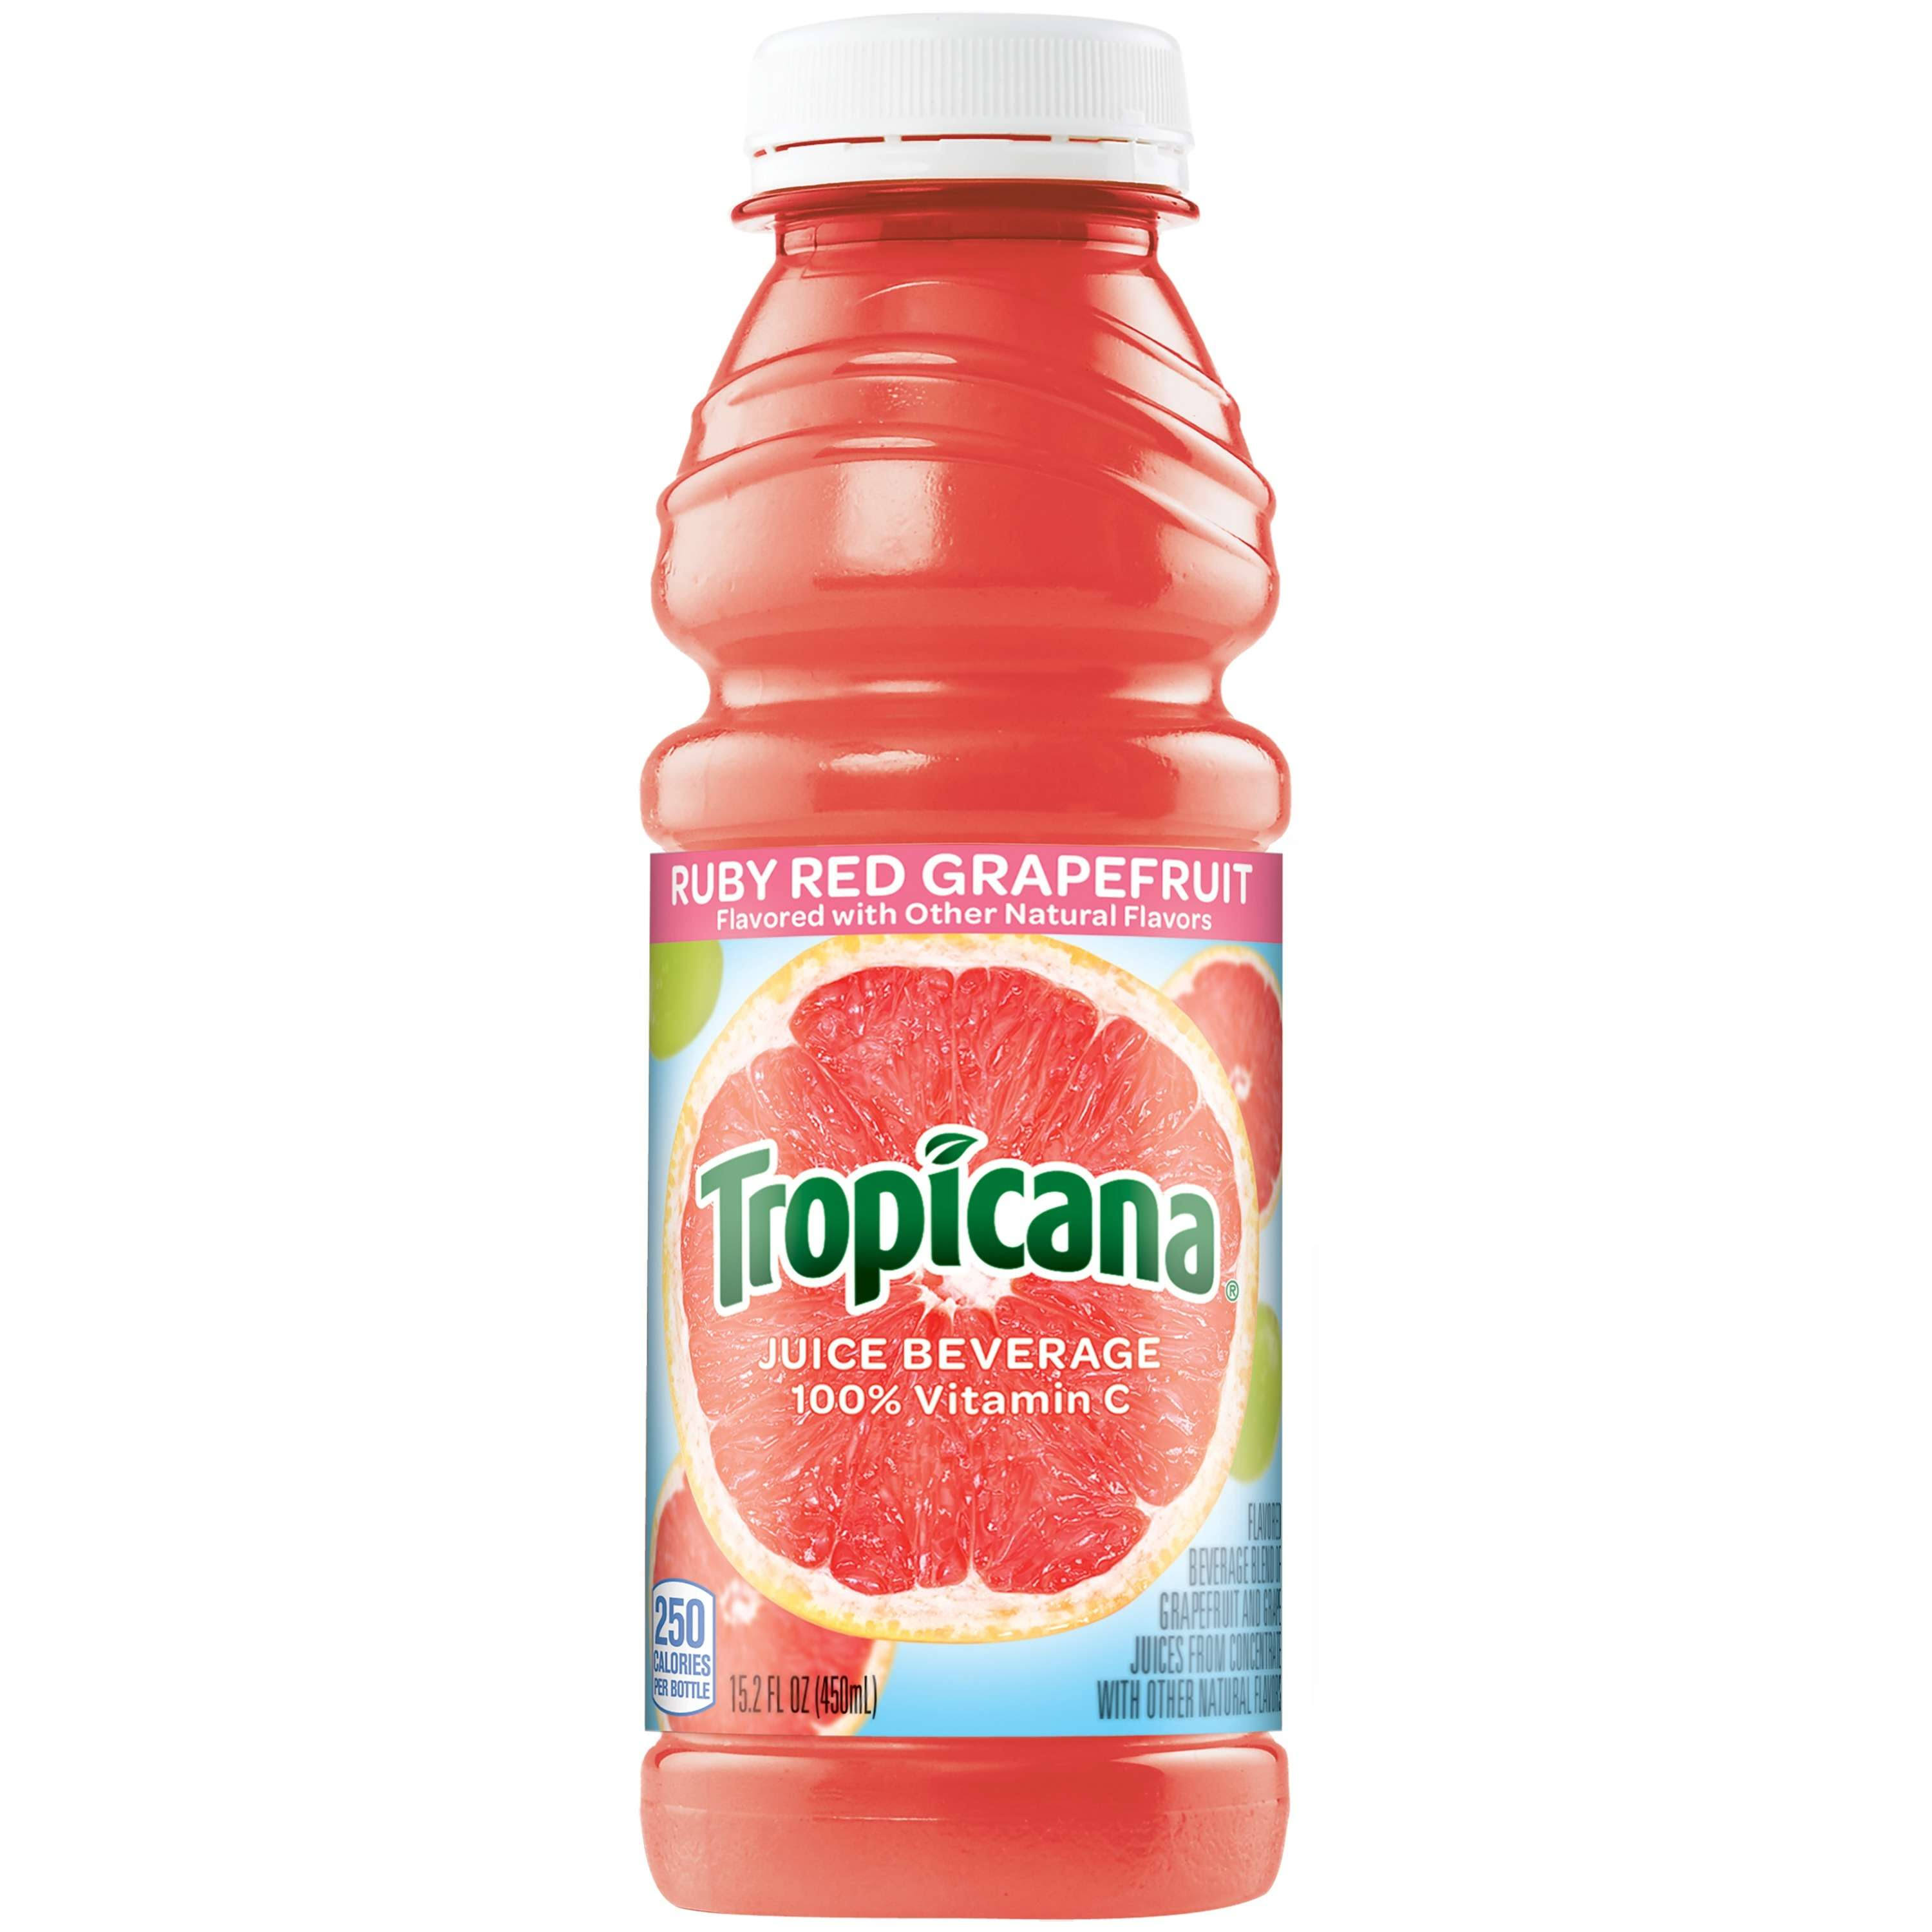 Tropicana Juice Beverage - Ruby Red Grapefruit, 15oz